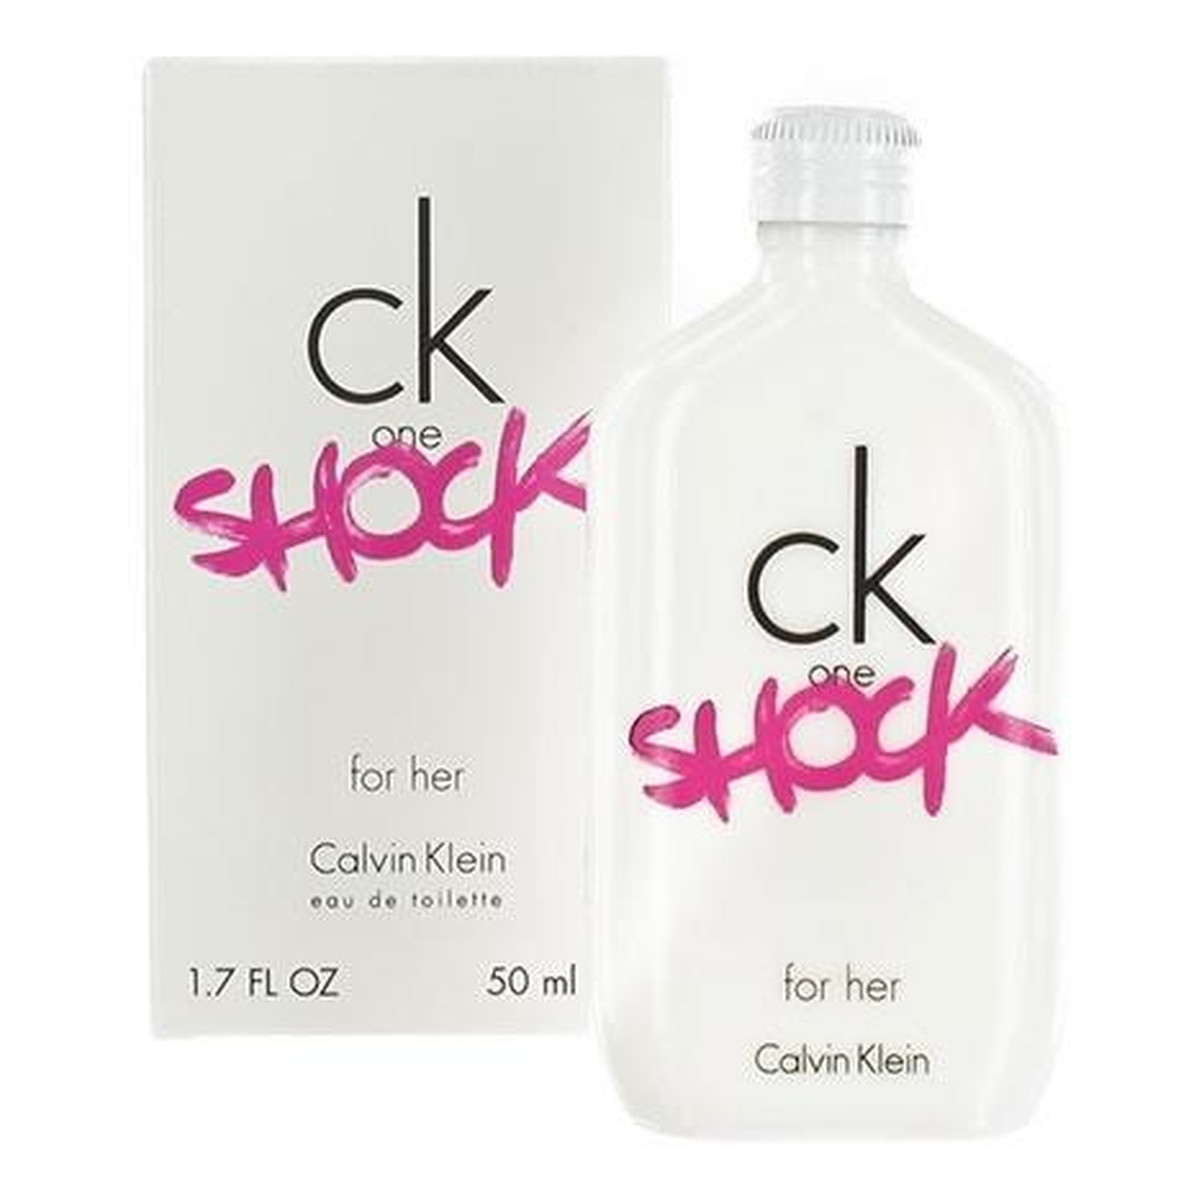 Calvin Klein CK ONE SHOCK HER eau de toilette spray 50ml